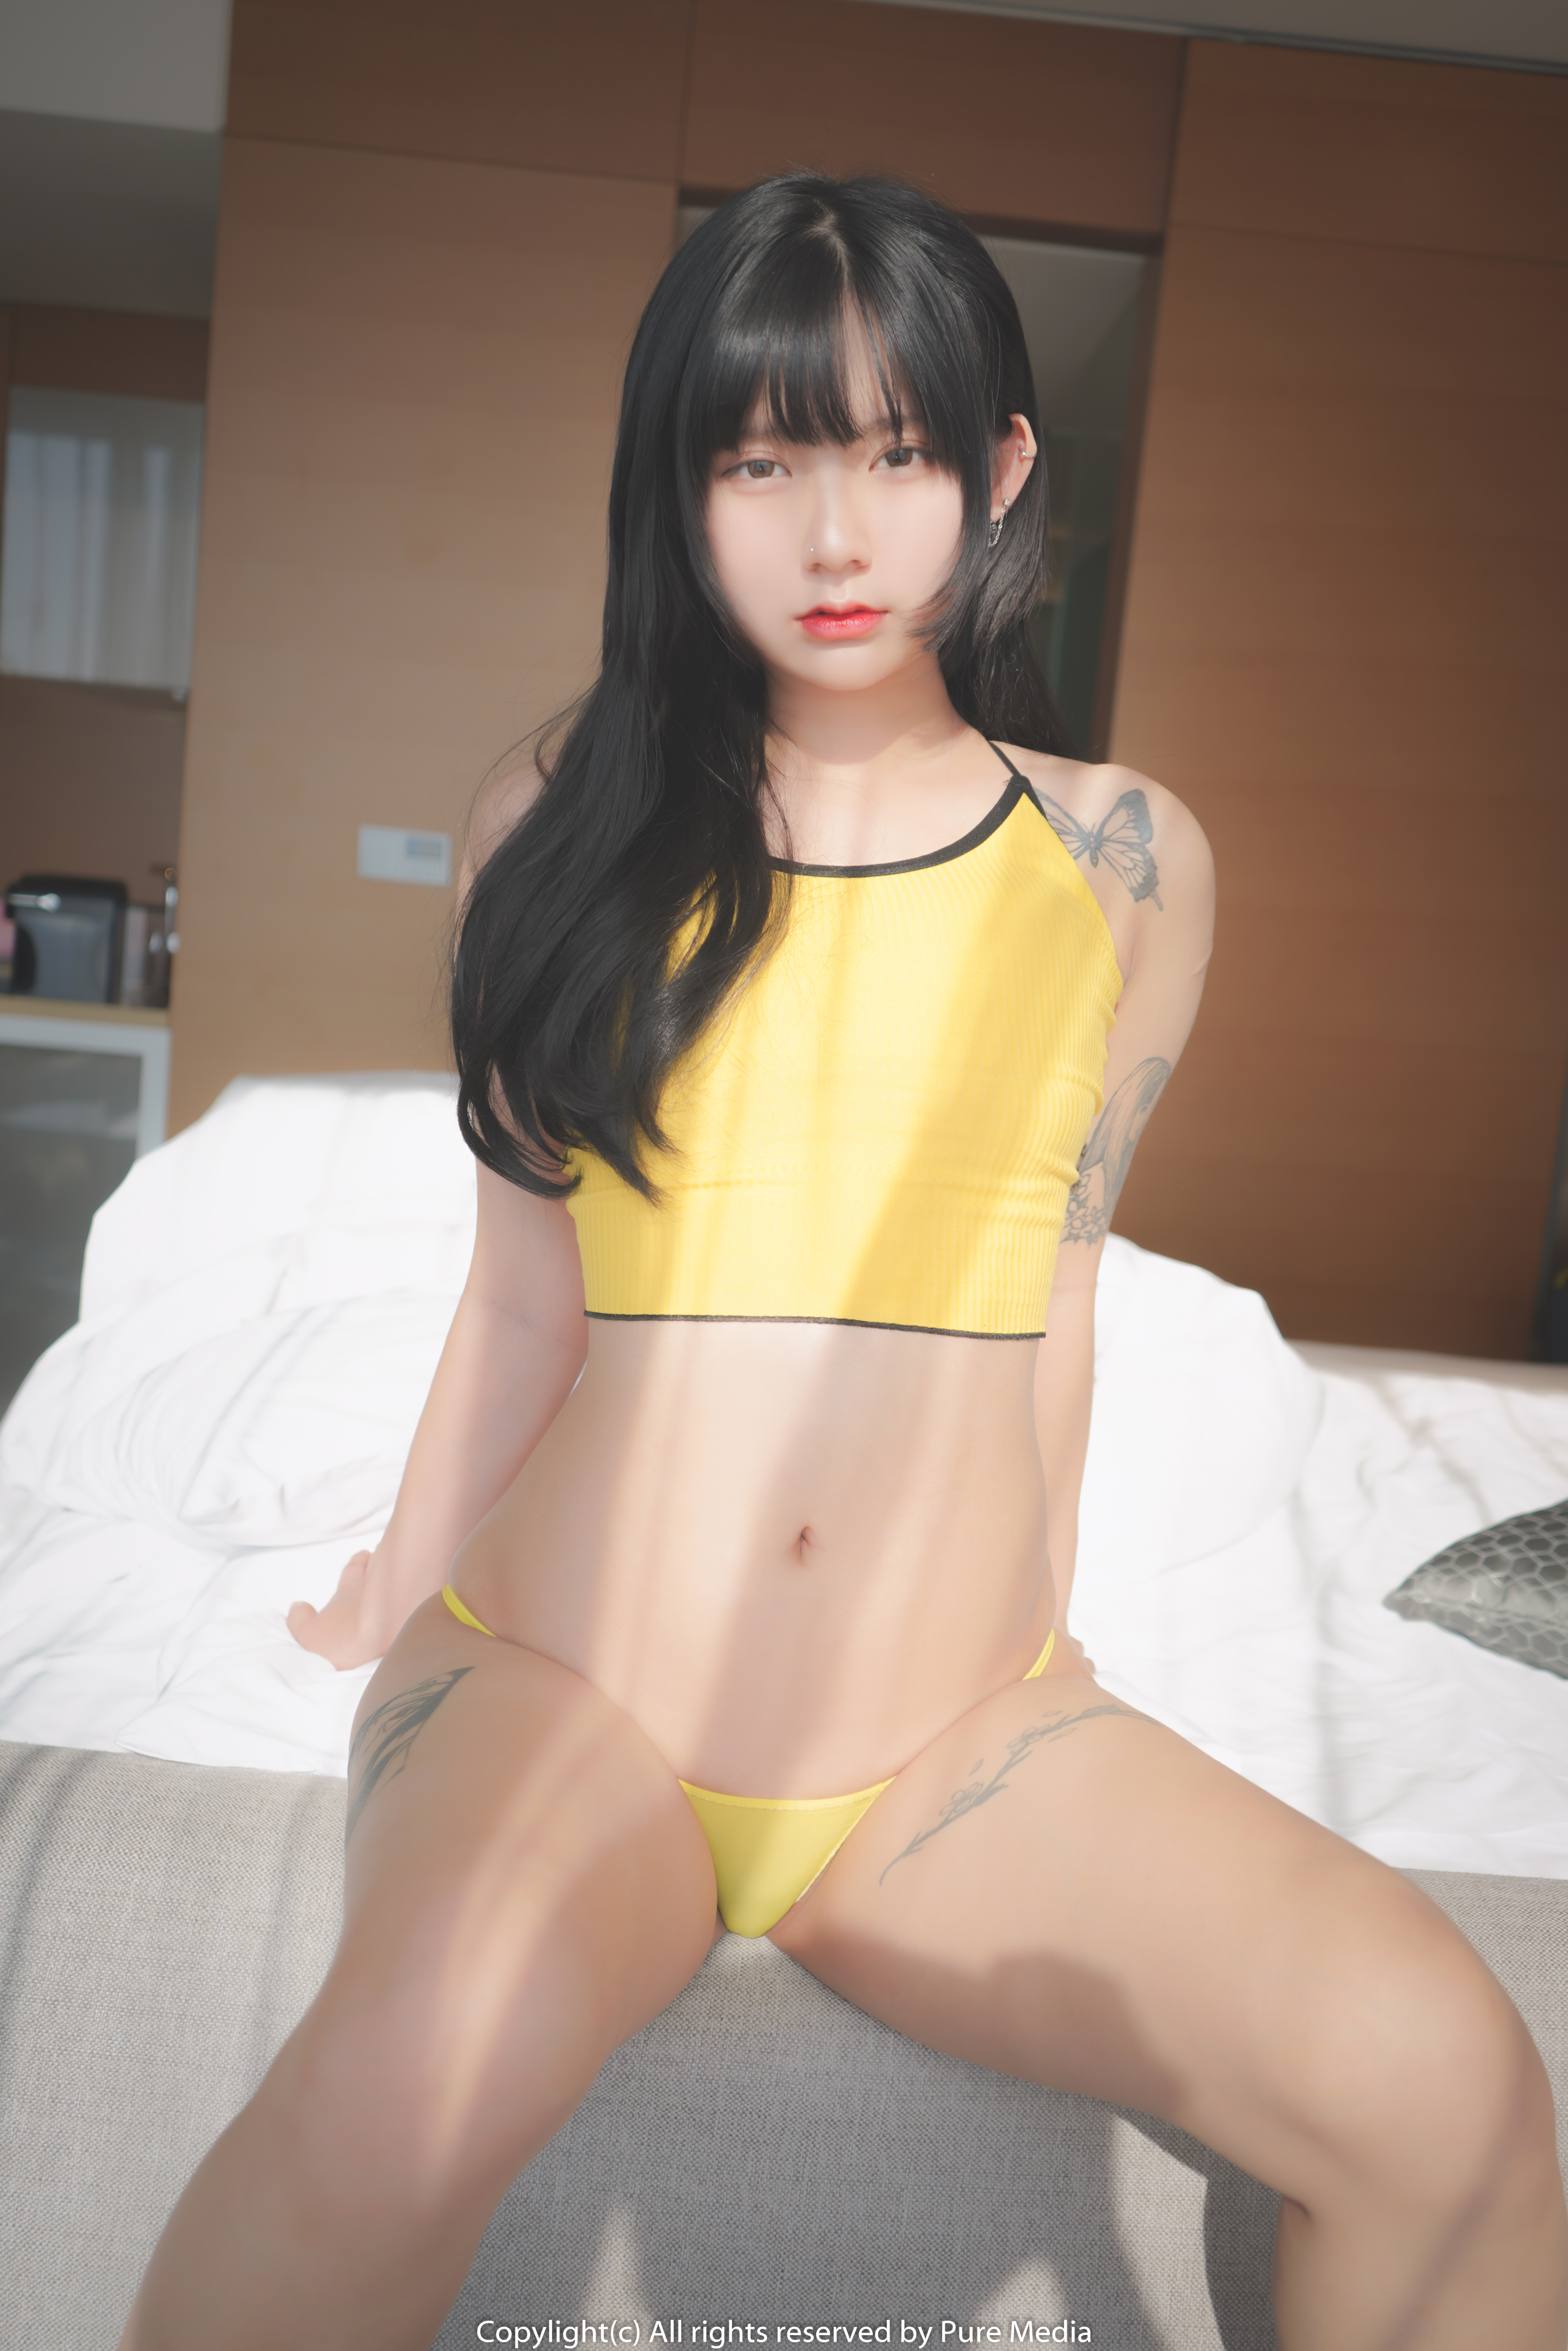 People 3335x5000 Hizzy Pure Media women model Asian yellow tops underwear panties yellow panties sitting indoors women indoors pale short hair